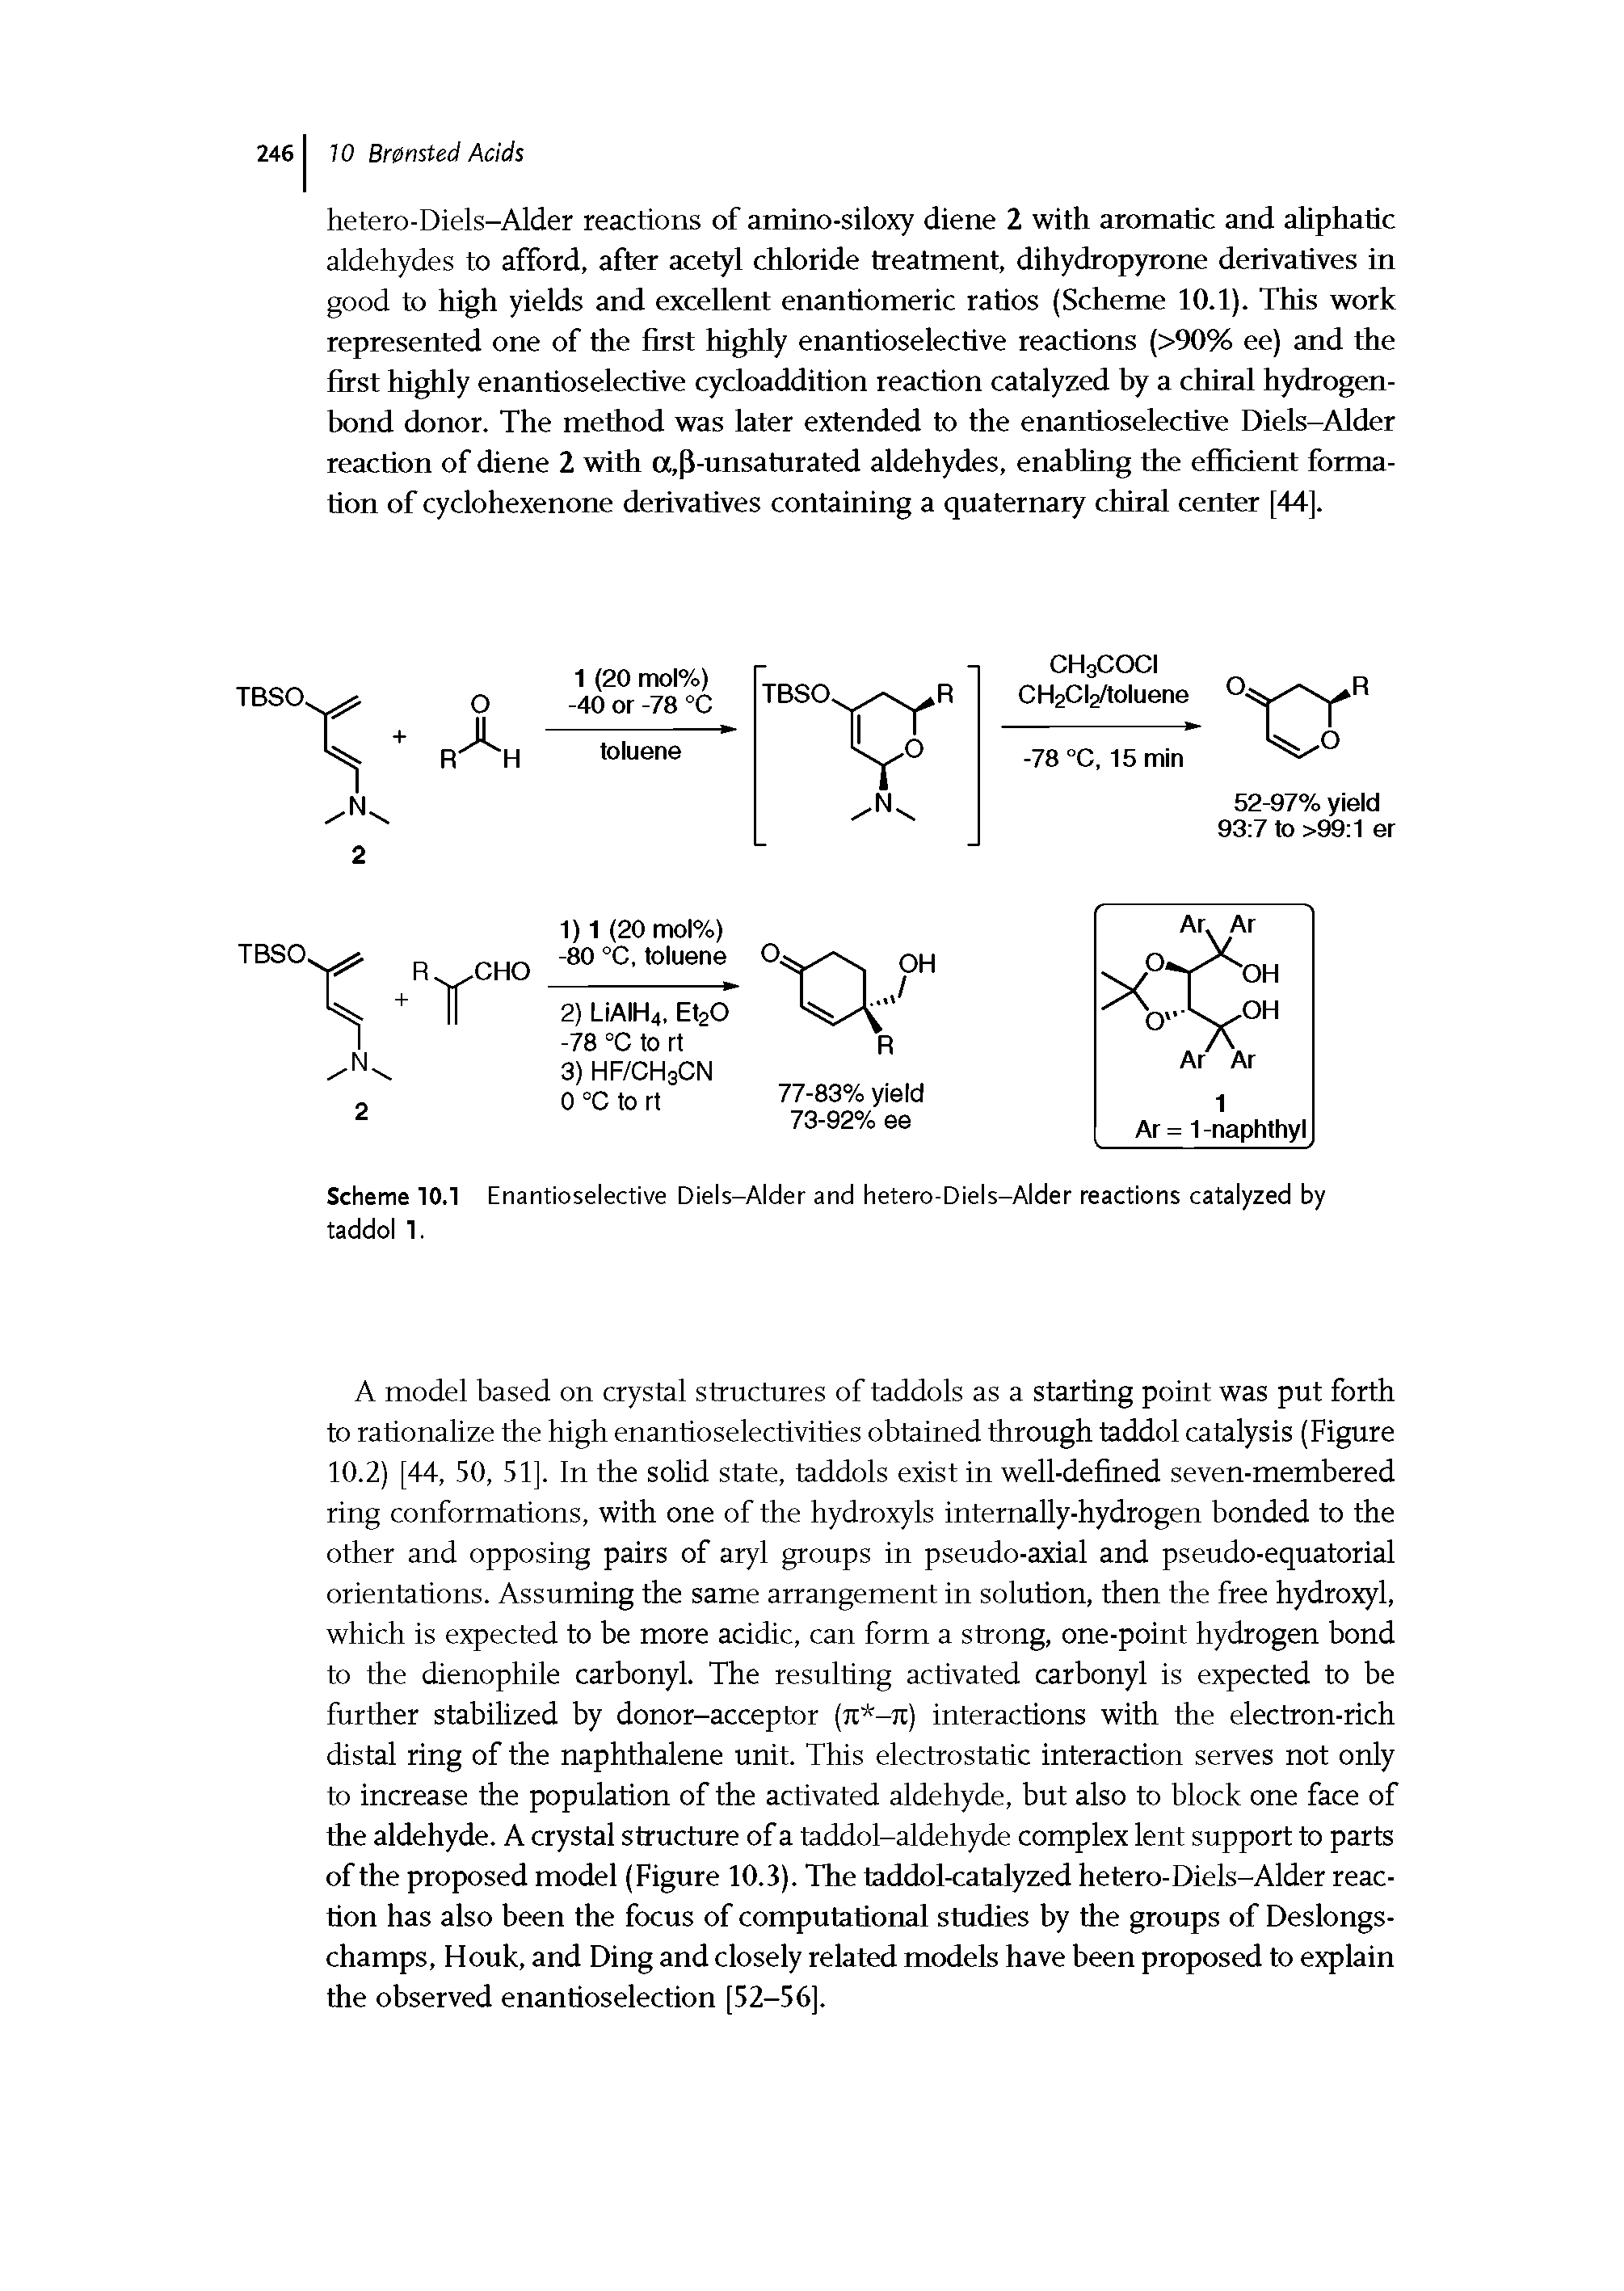 Scheme 10.1 Enantioselective Diels-Alder and hetero-Diels-Alder reactions catalyzed by taddol 1.